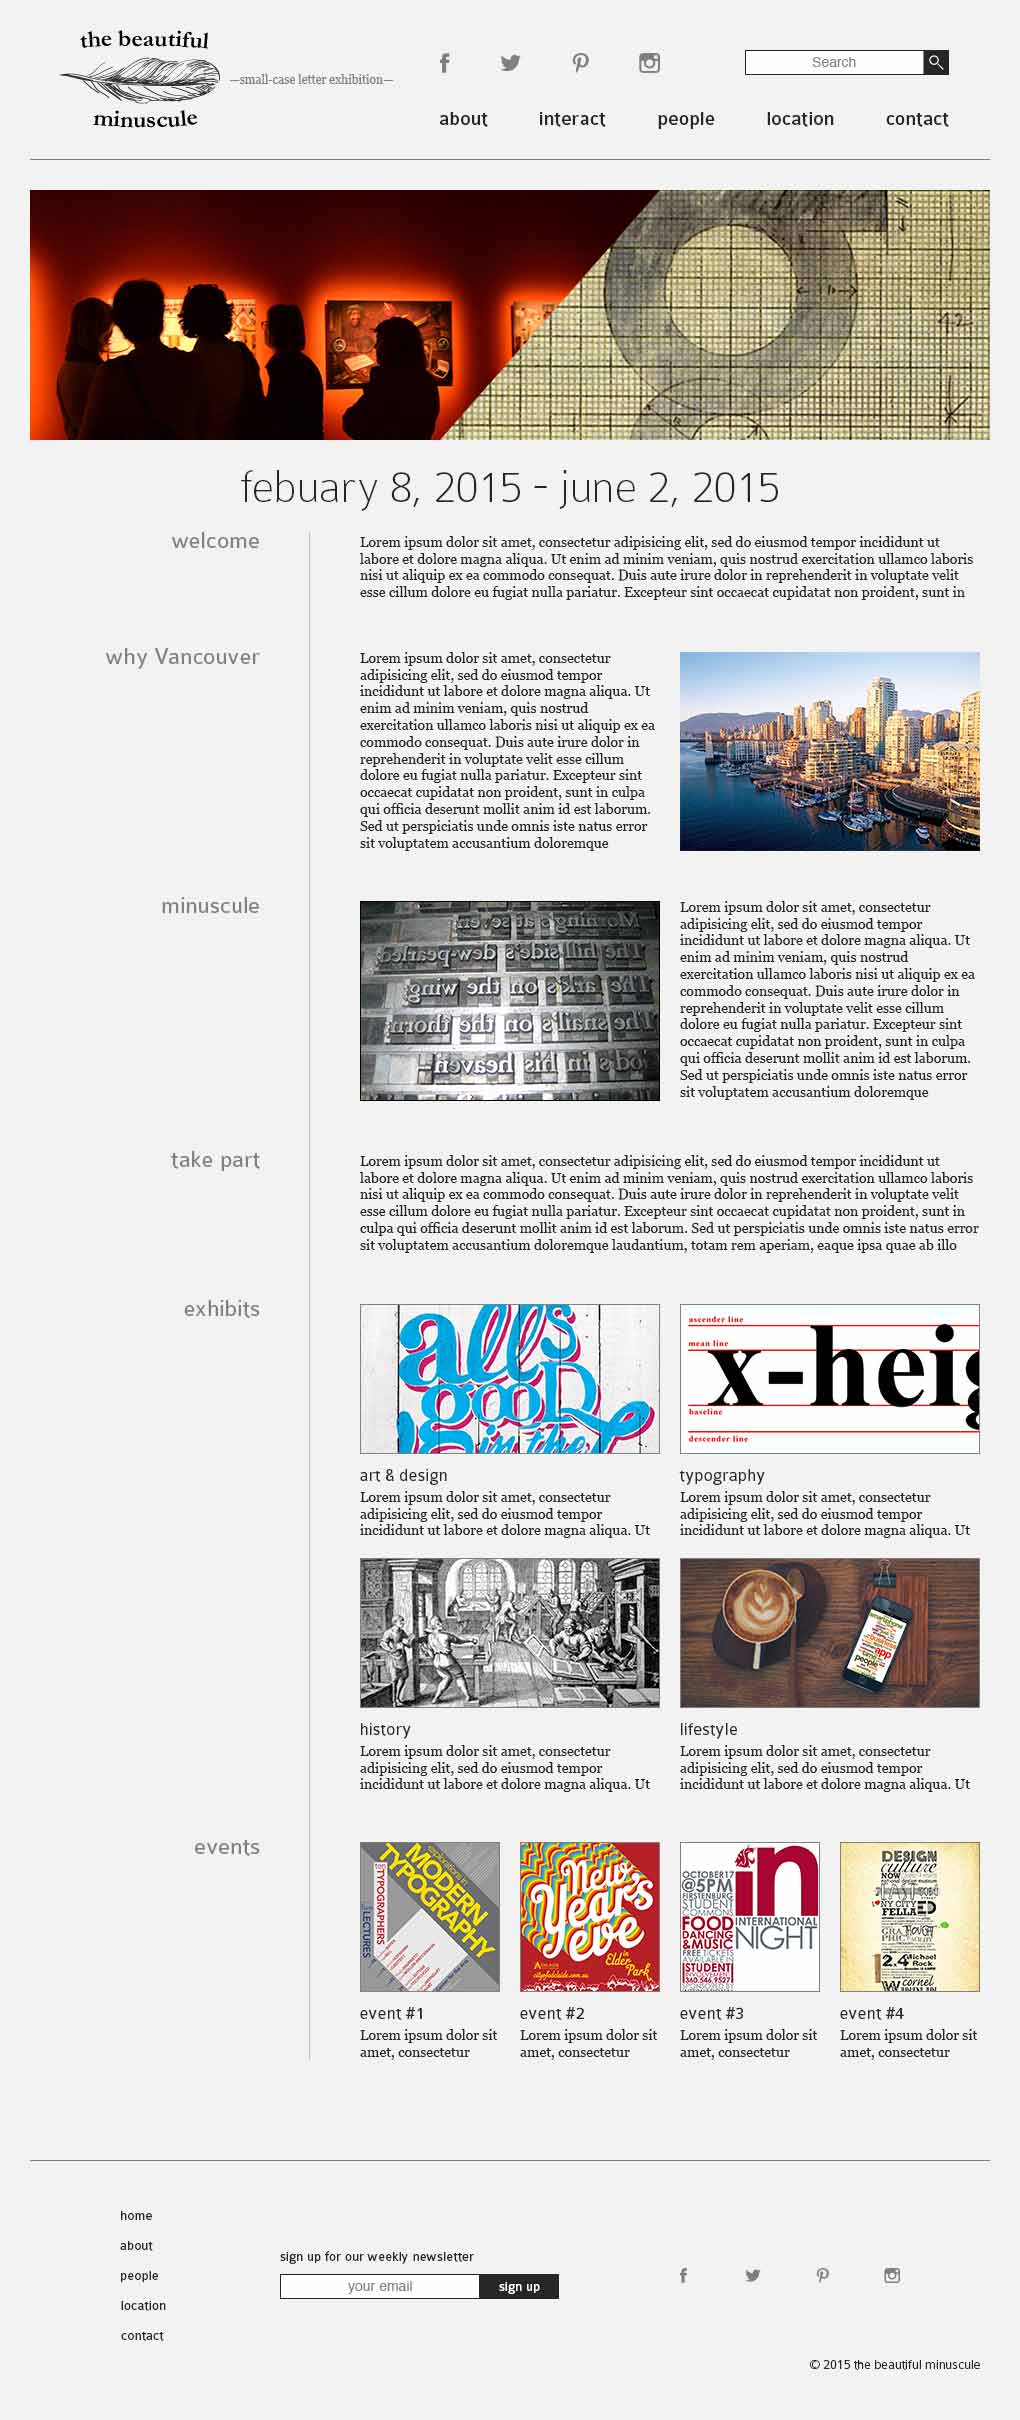 Small is Beautiful Event Website Design Mockup Composite 2